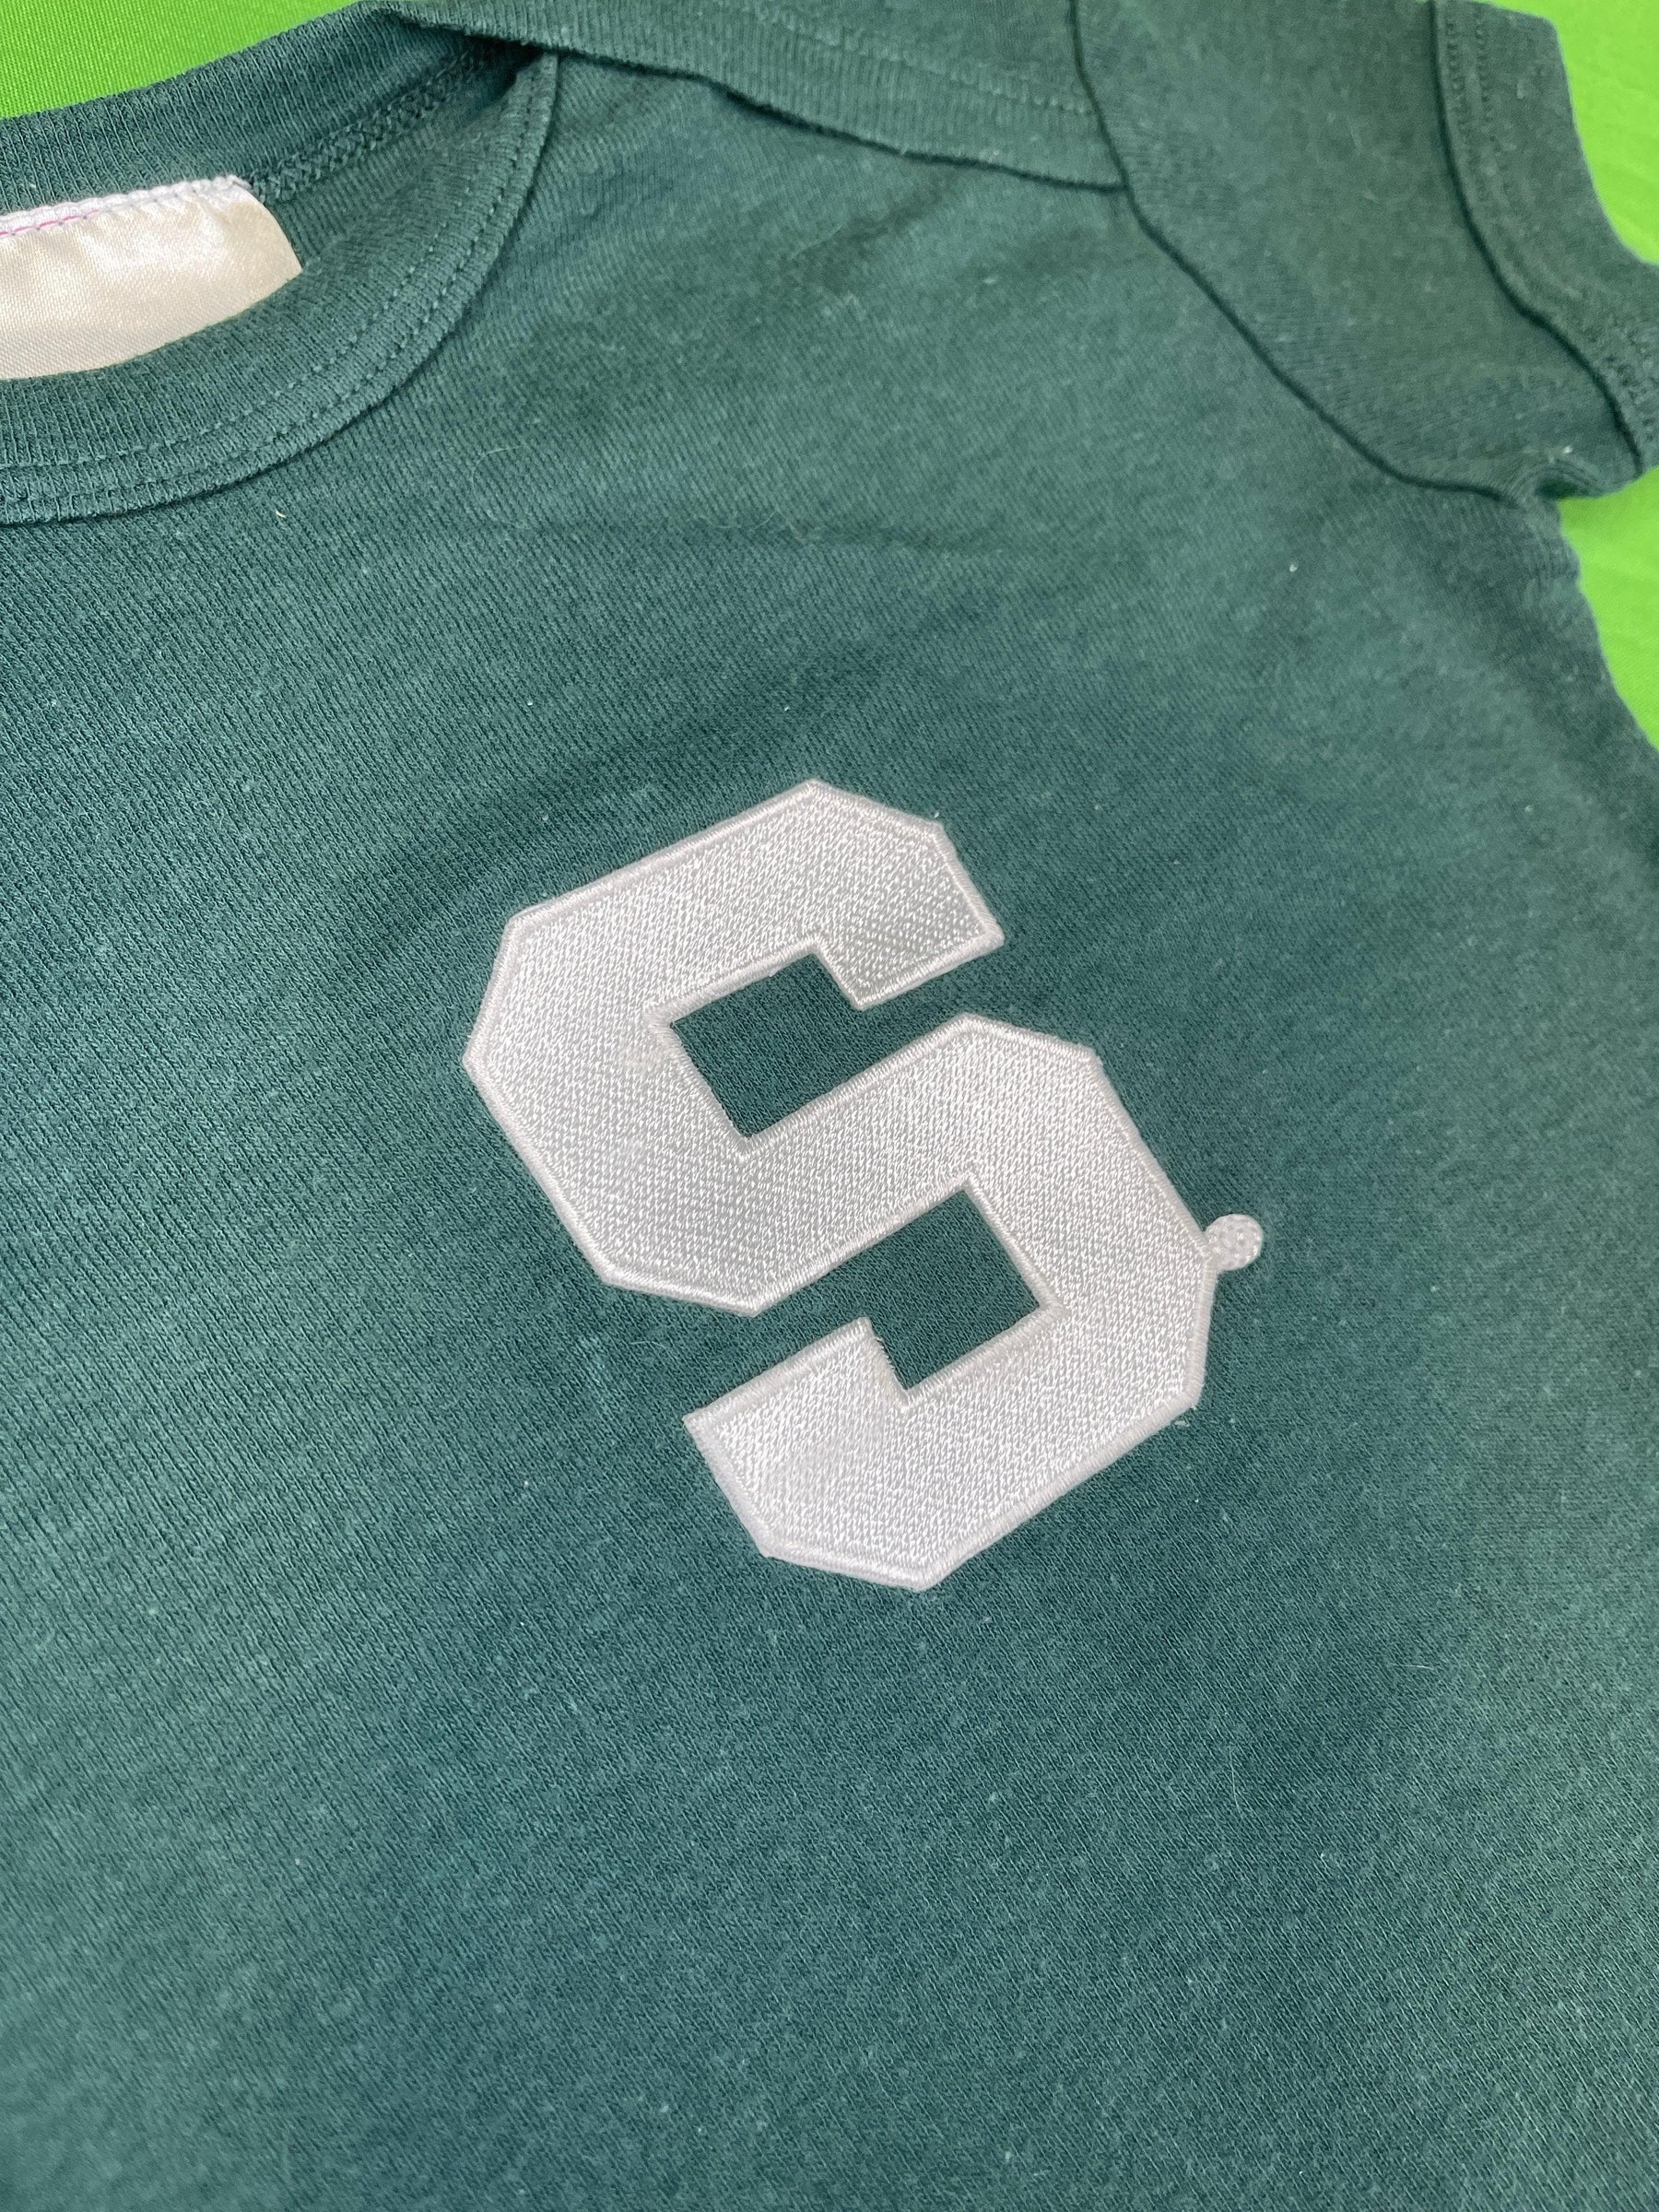 NCAA Michigan State Spartans Green Bodysuit 12 months